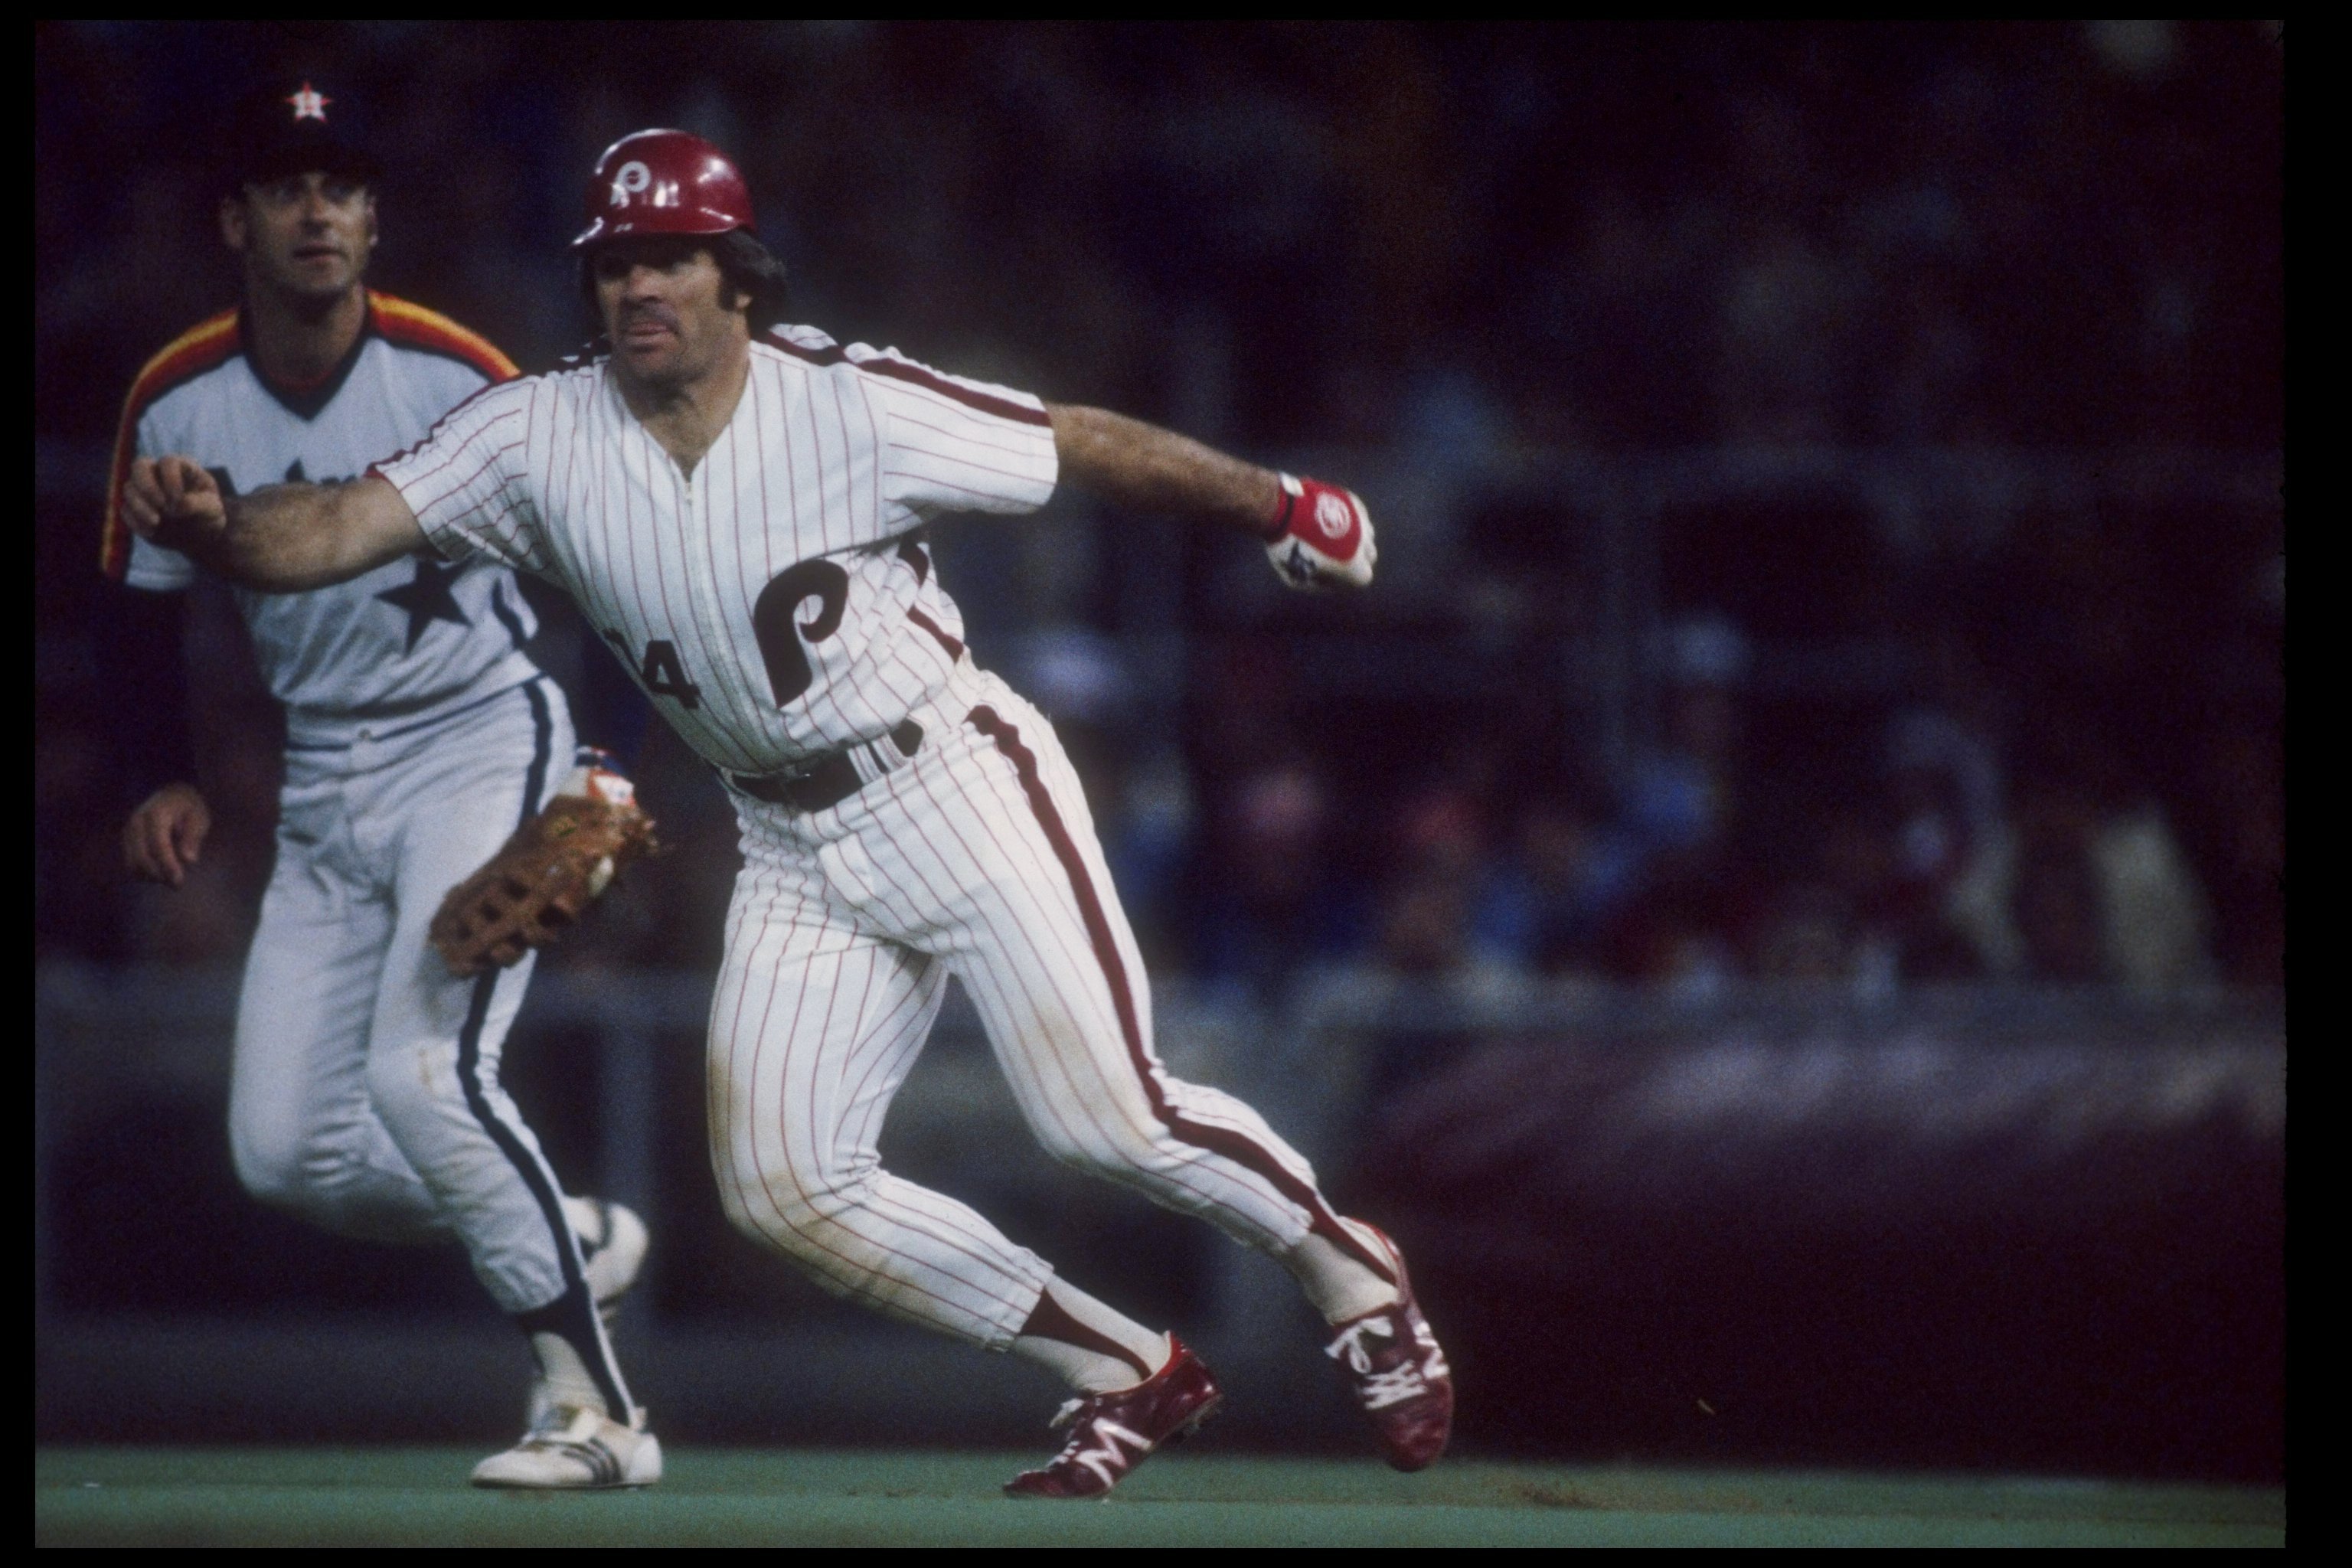 1980 Phillies win World Series